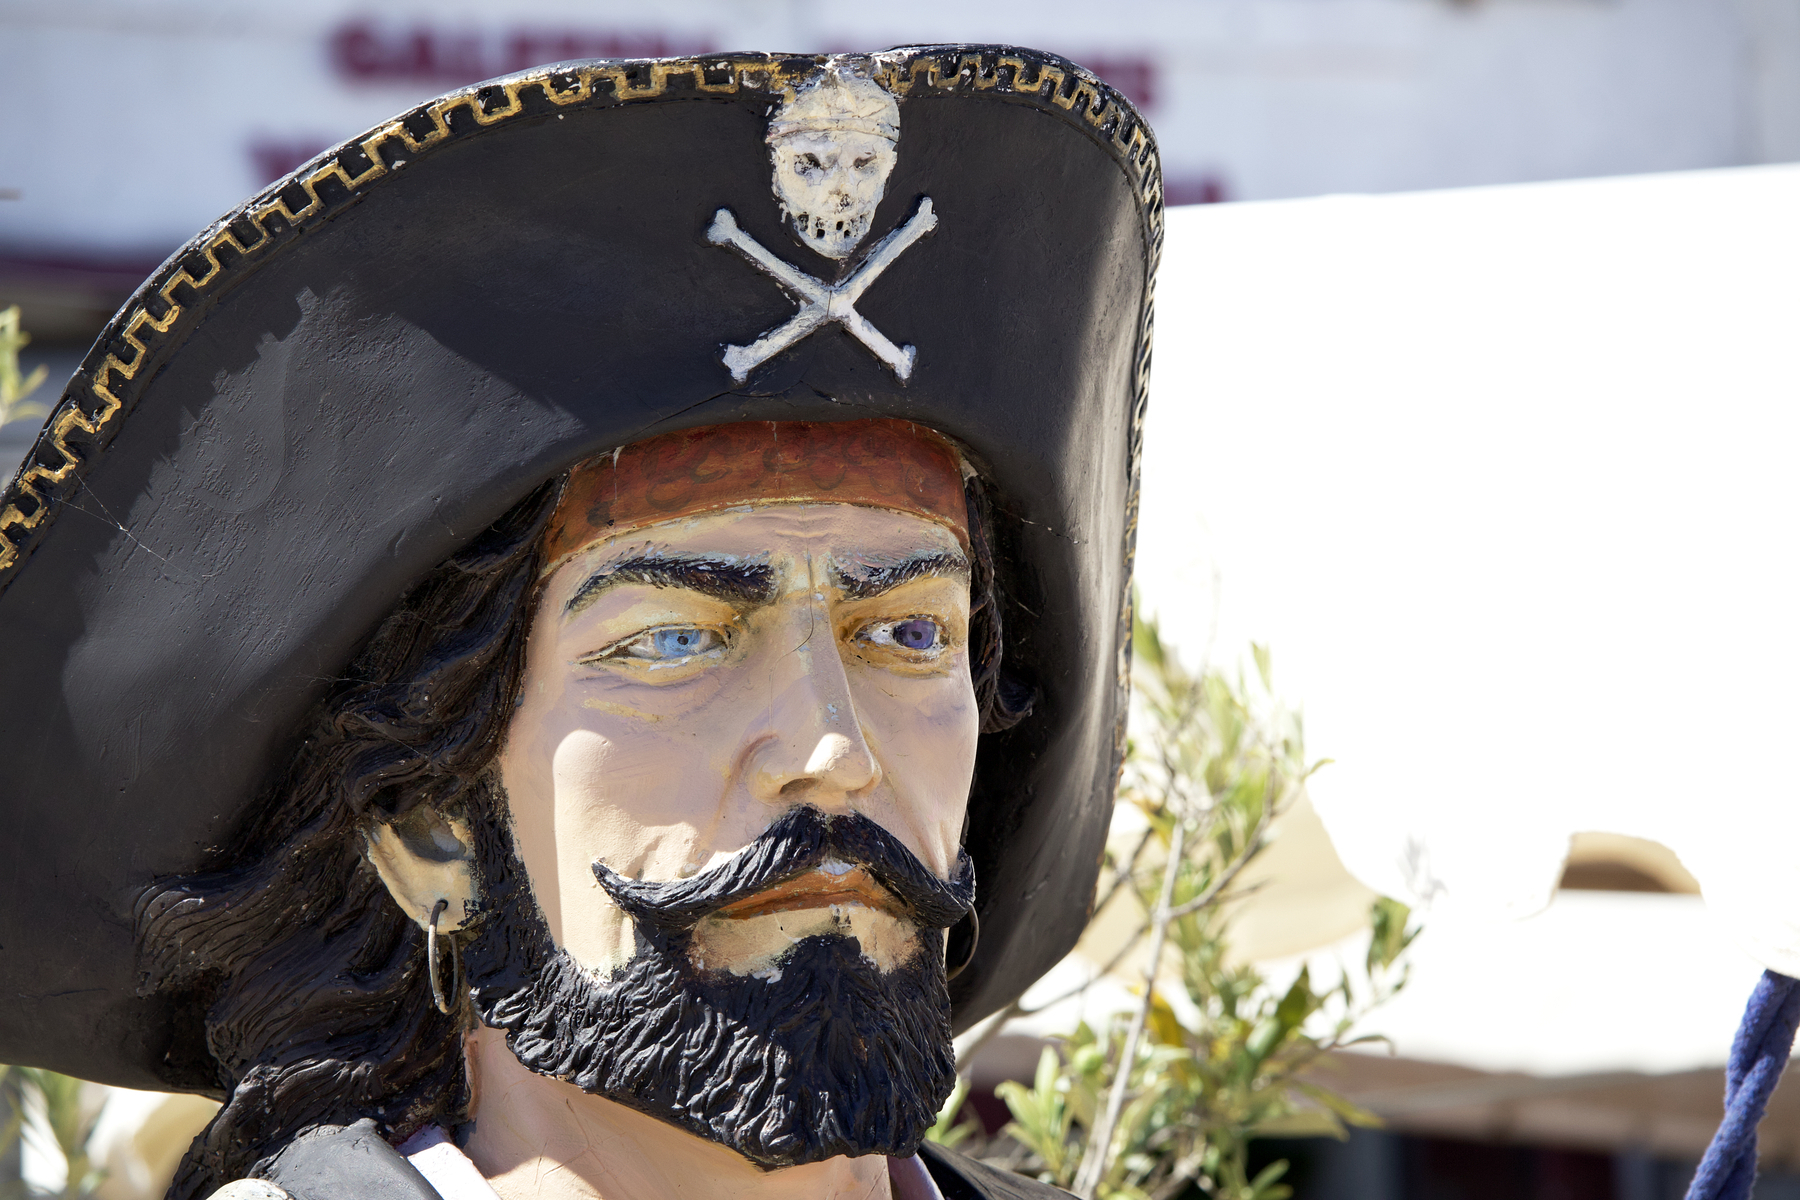 A life size model pirate in La Flotte, France. 